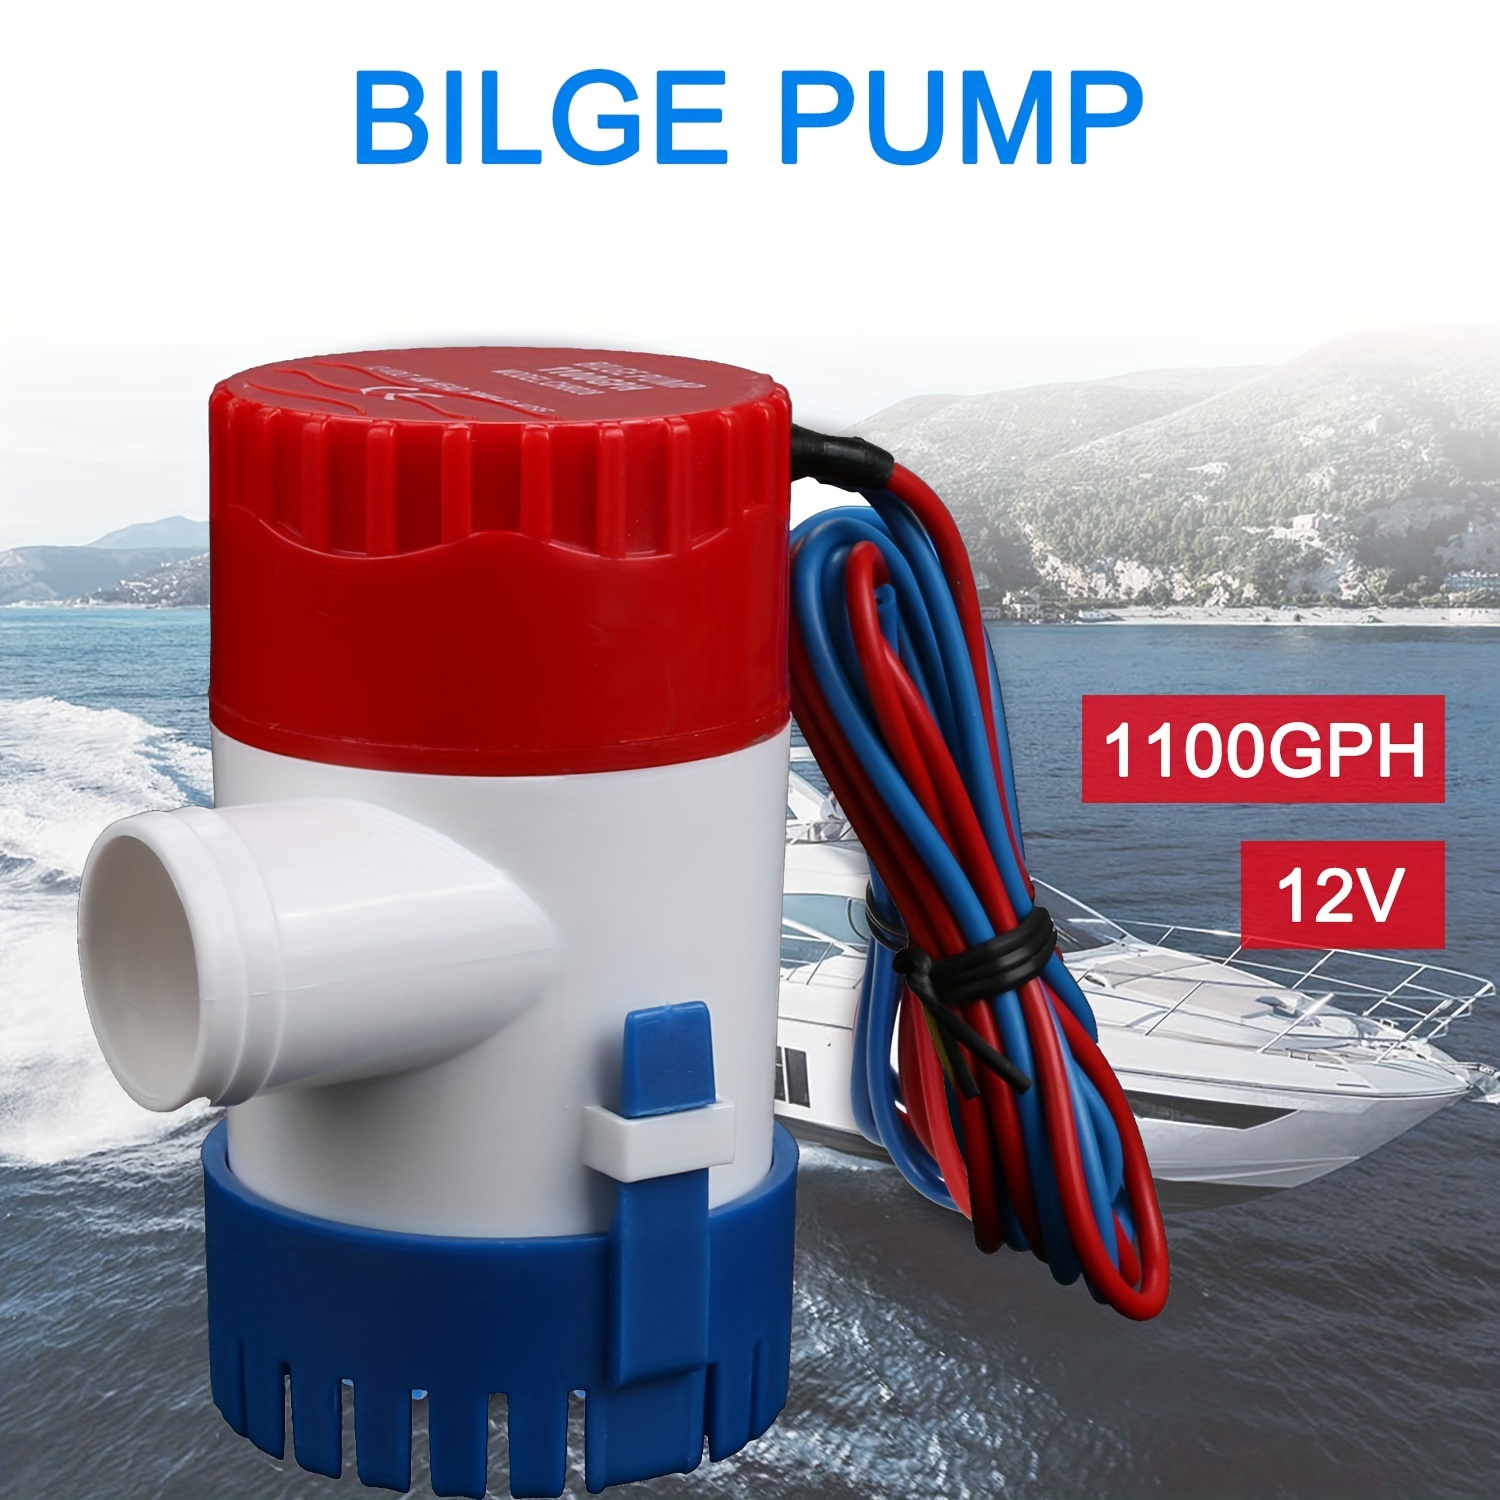 Bilge Pump 12v 1100gph Electric Water Pump Boats Seaplane Motor